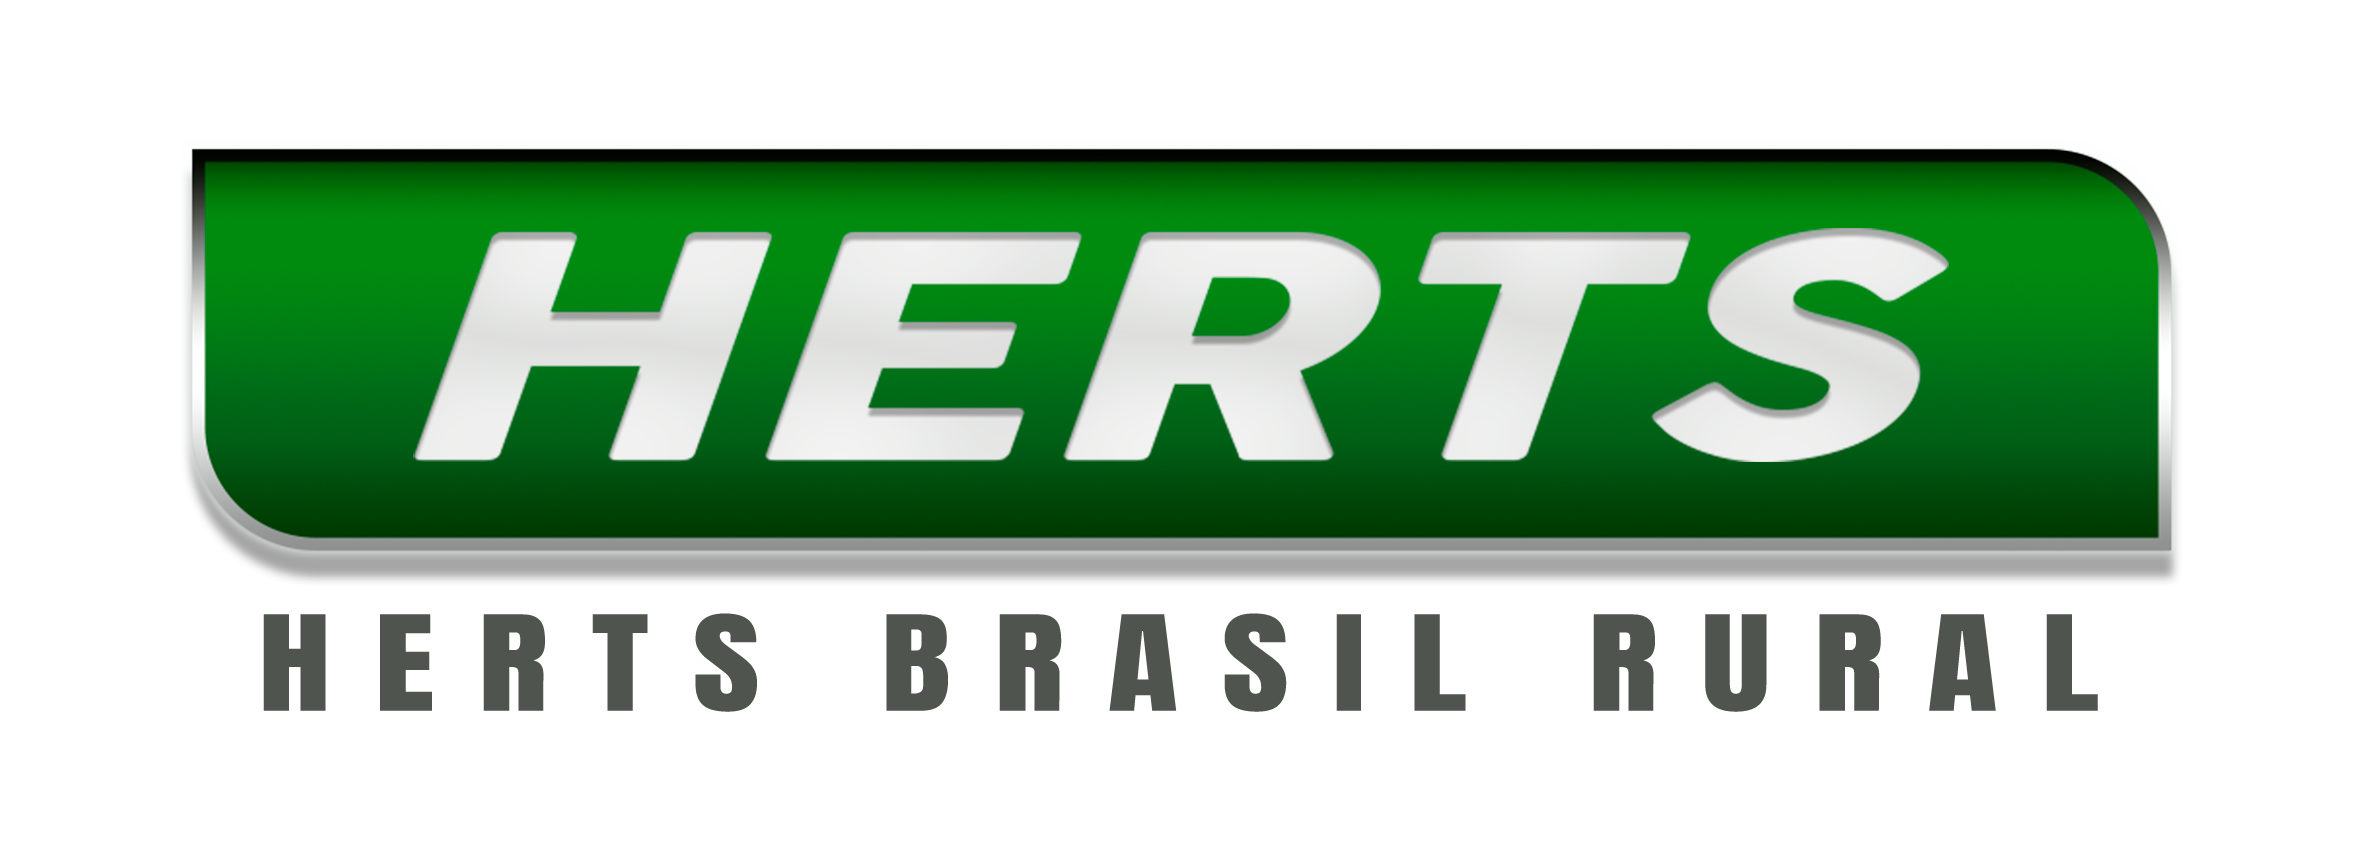 Herts Brasil Rural